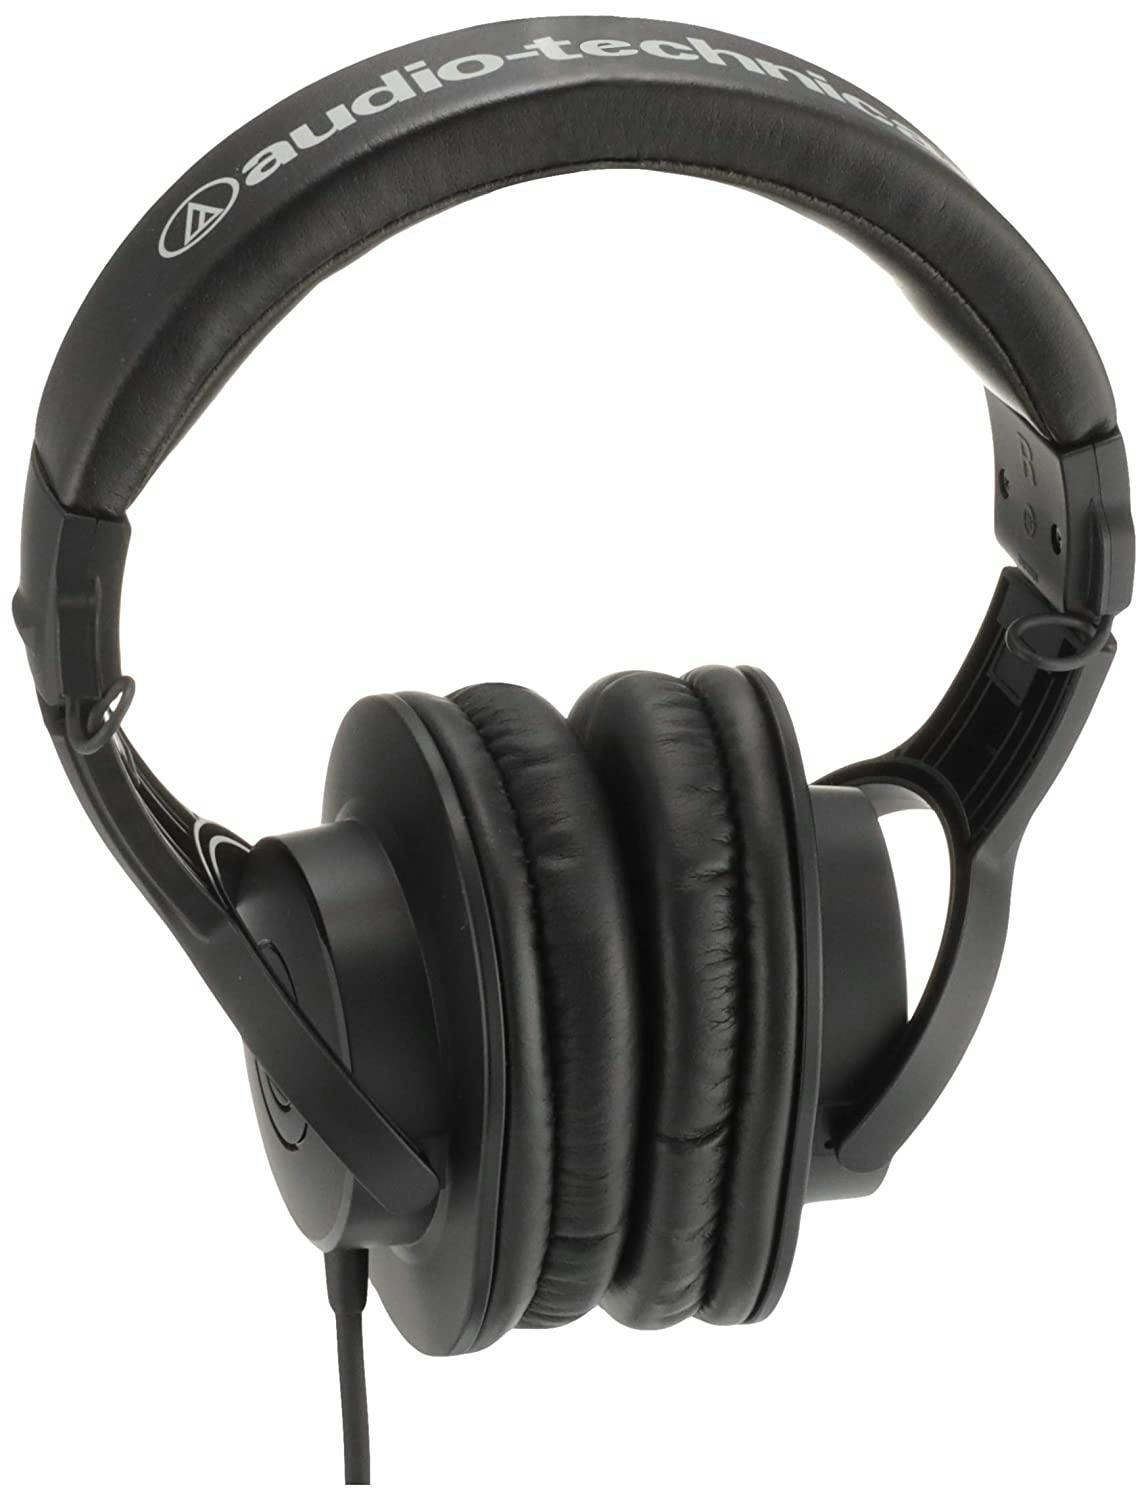 audio technica ath-m20x headphone features